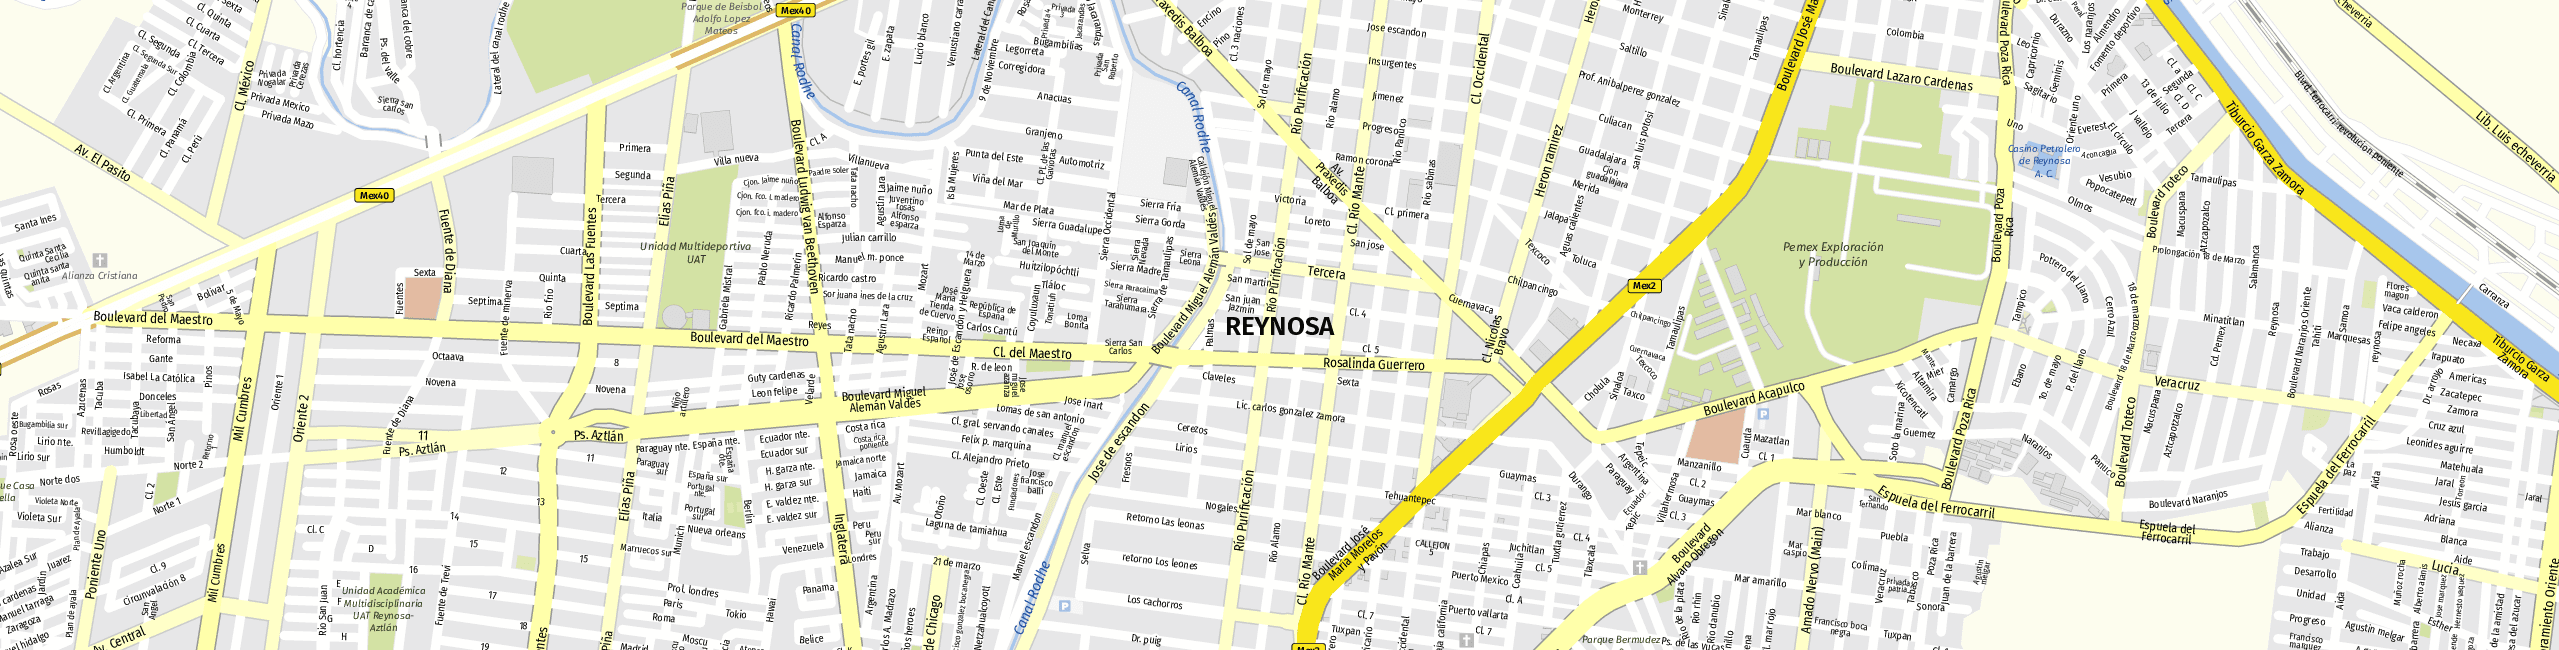 Stadtplan Reynosa zum Downloaden.